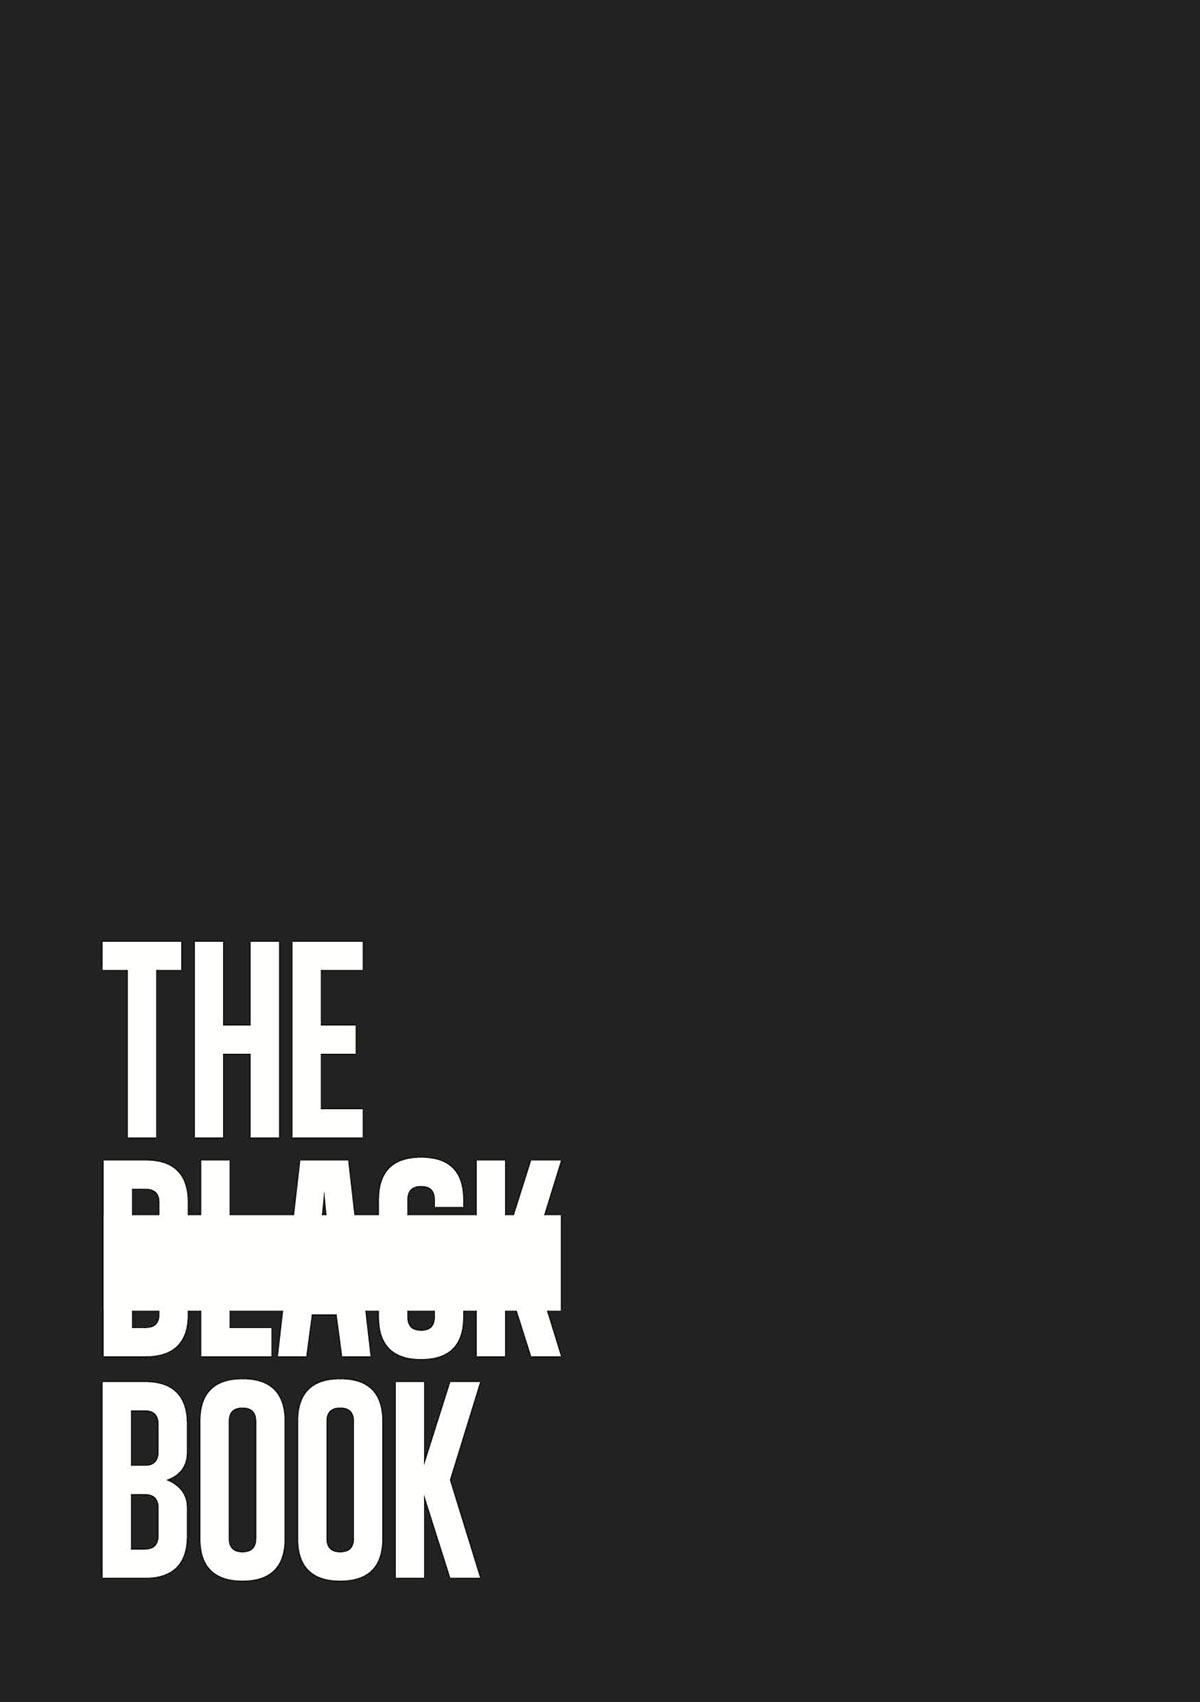 #blackandwhite #frankocean #bobmarley #yeezus #muhammadali #willsmithquote #poetic